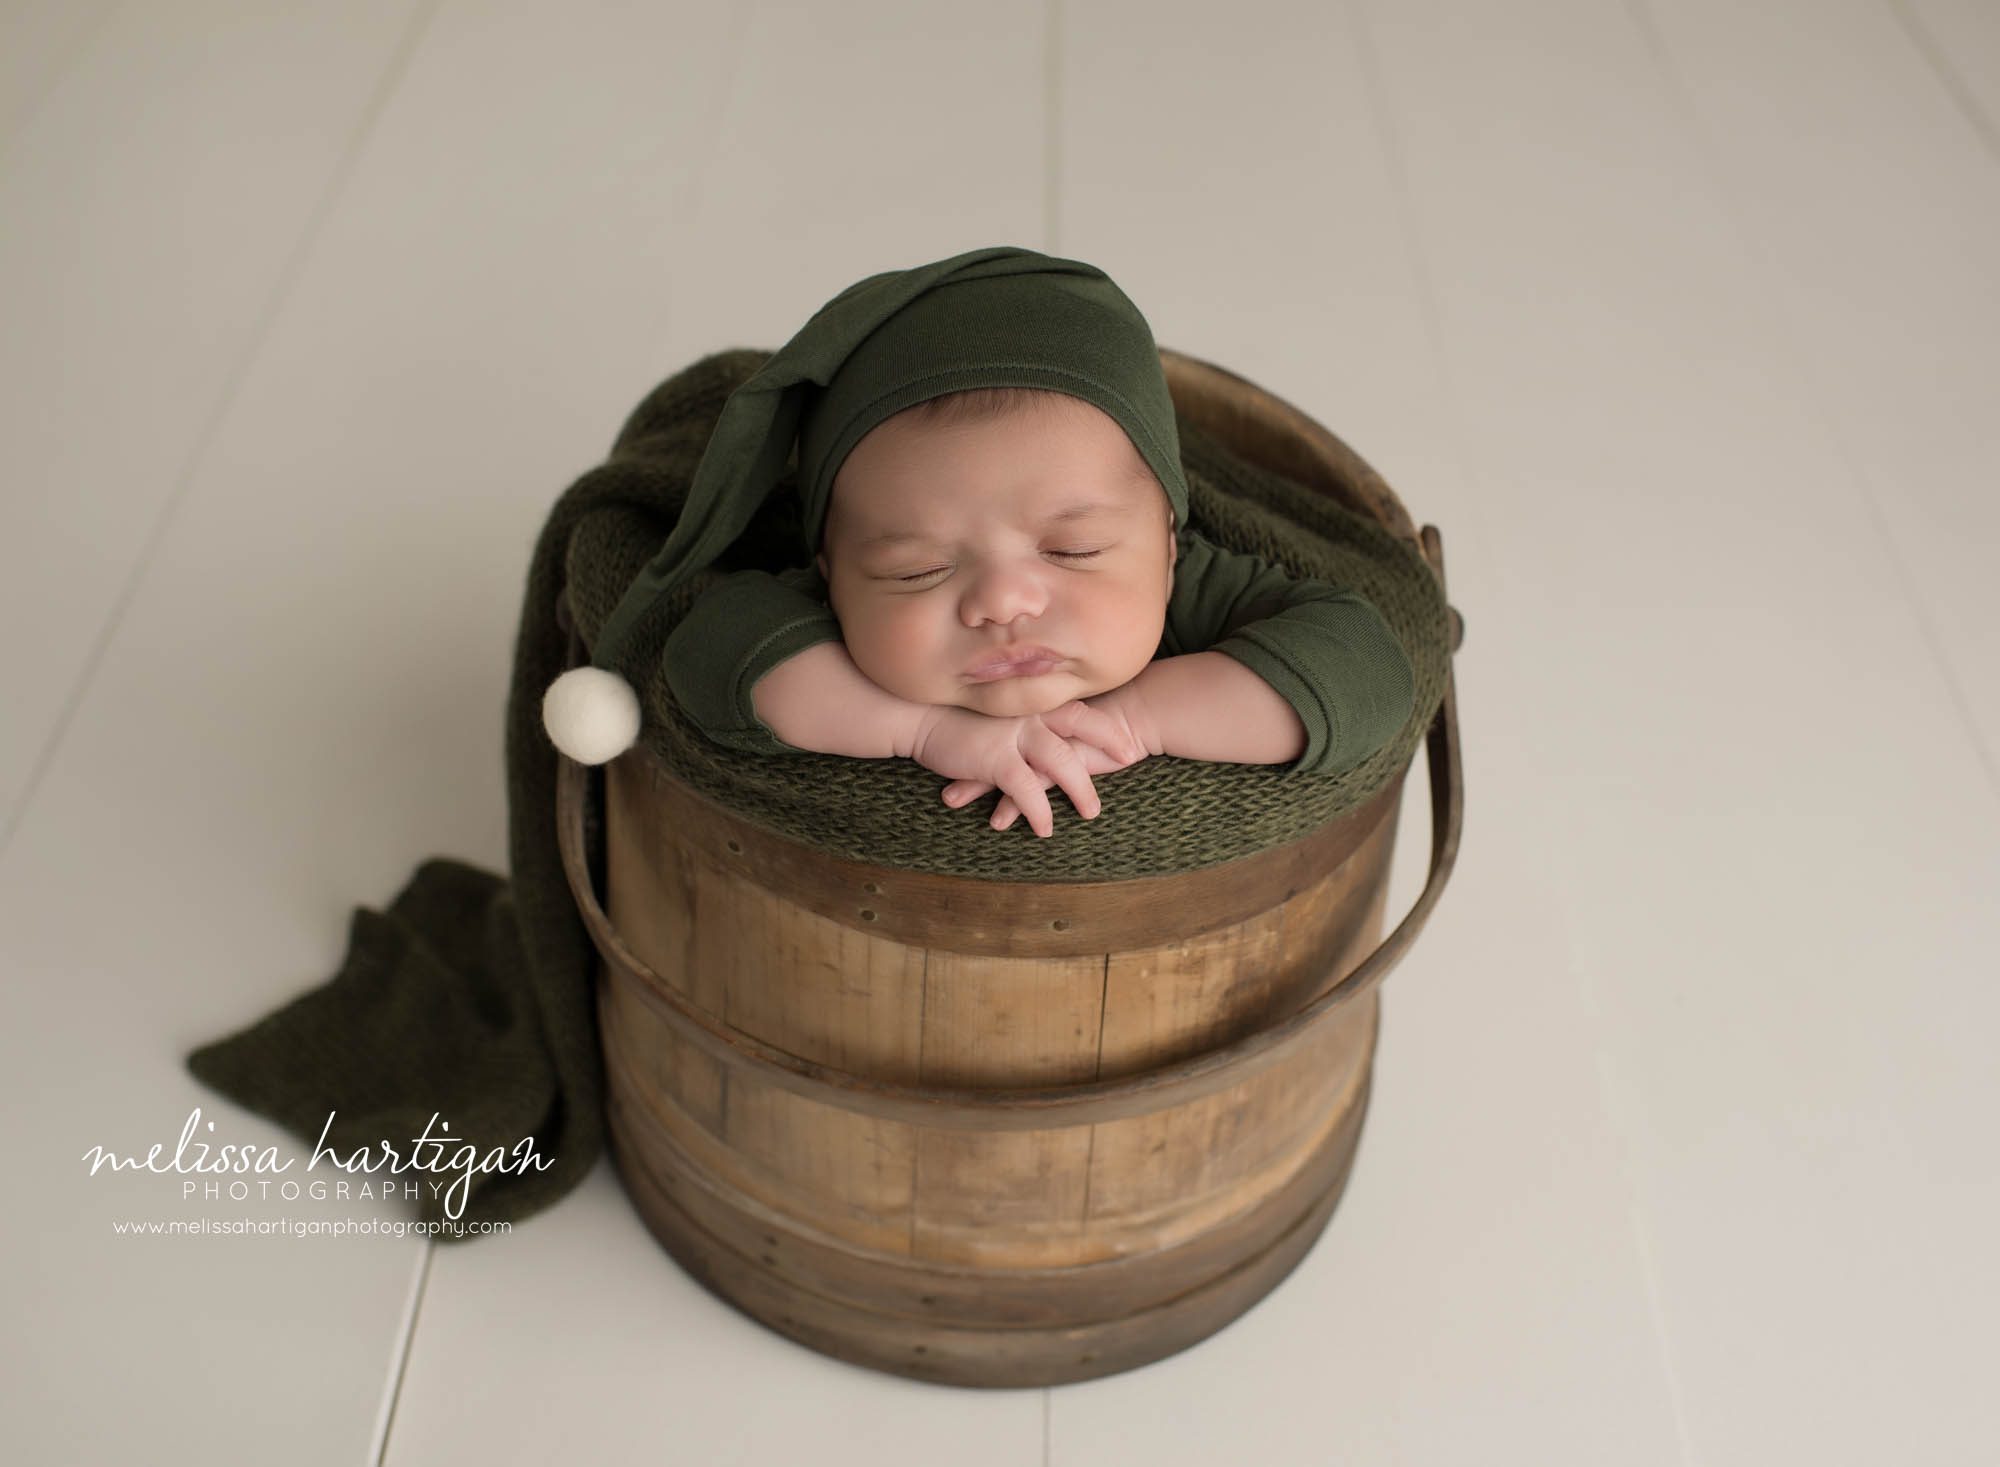 newborn baby boy posed on wooden barrel wearing green sleepy cap with cream pom on it